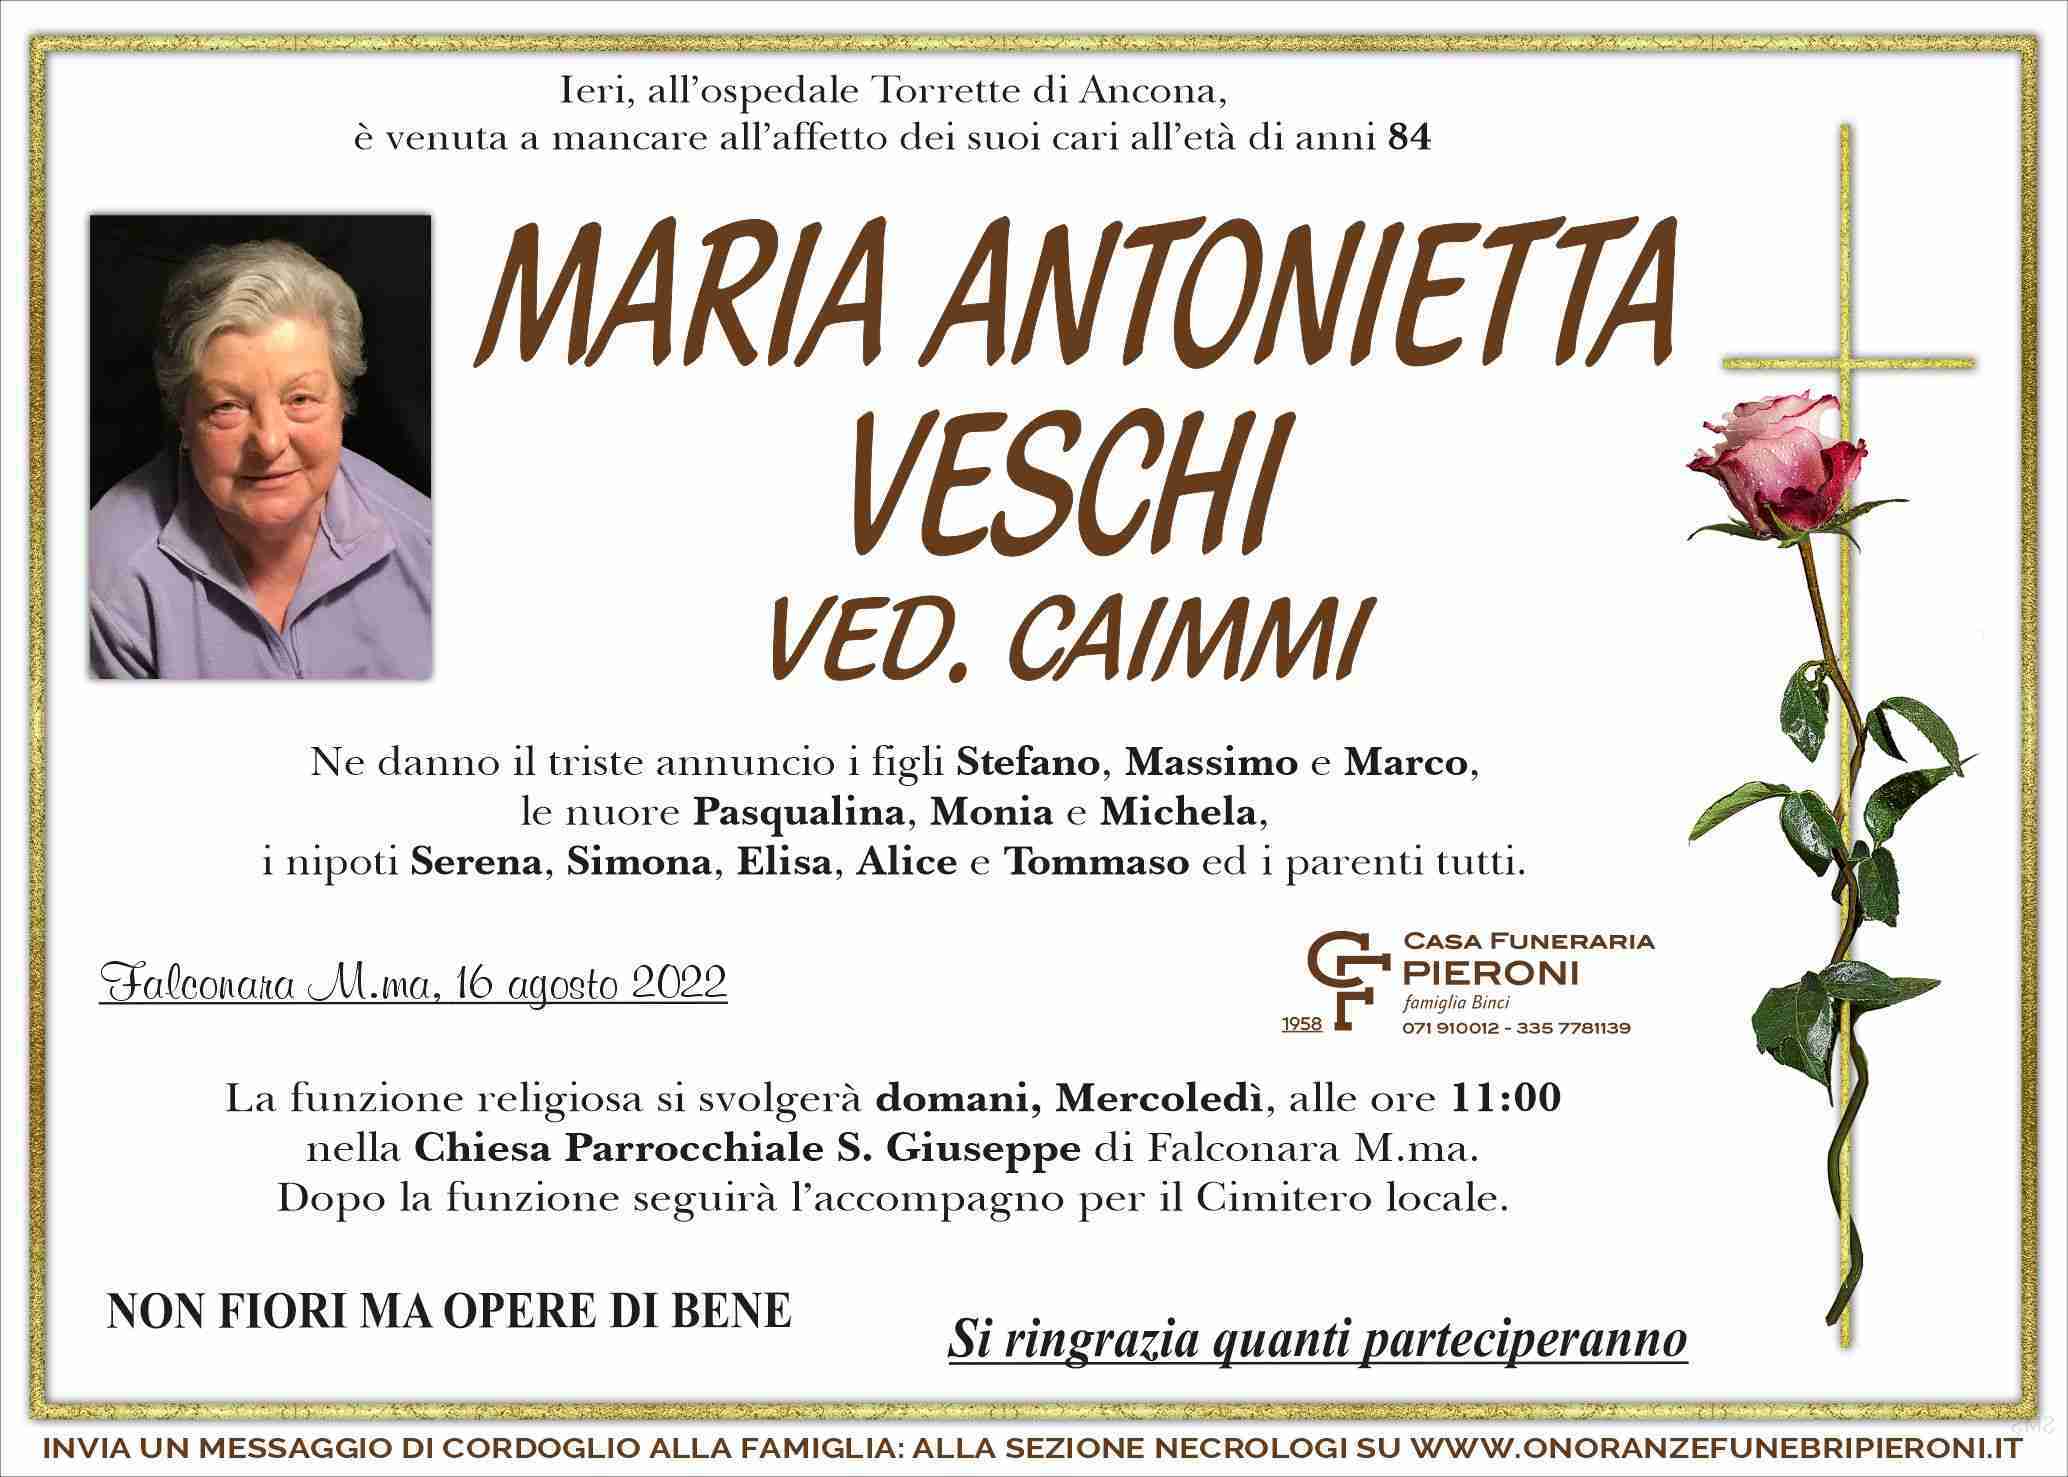 Maria Antonietta Veschi